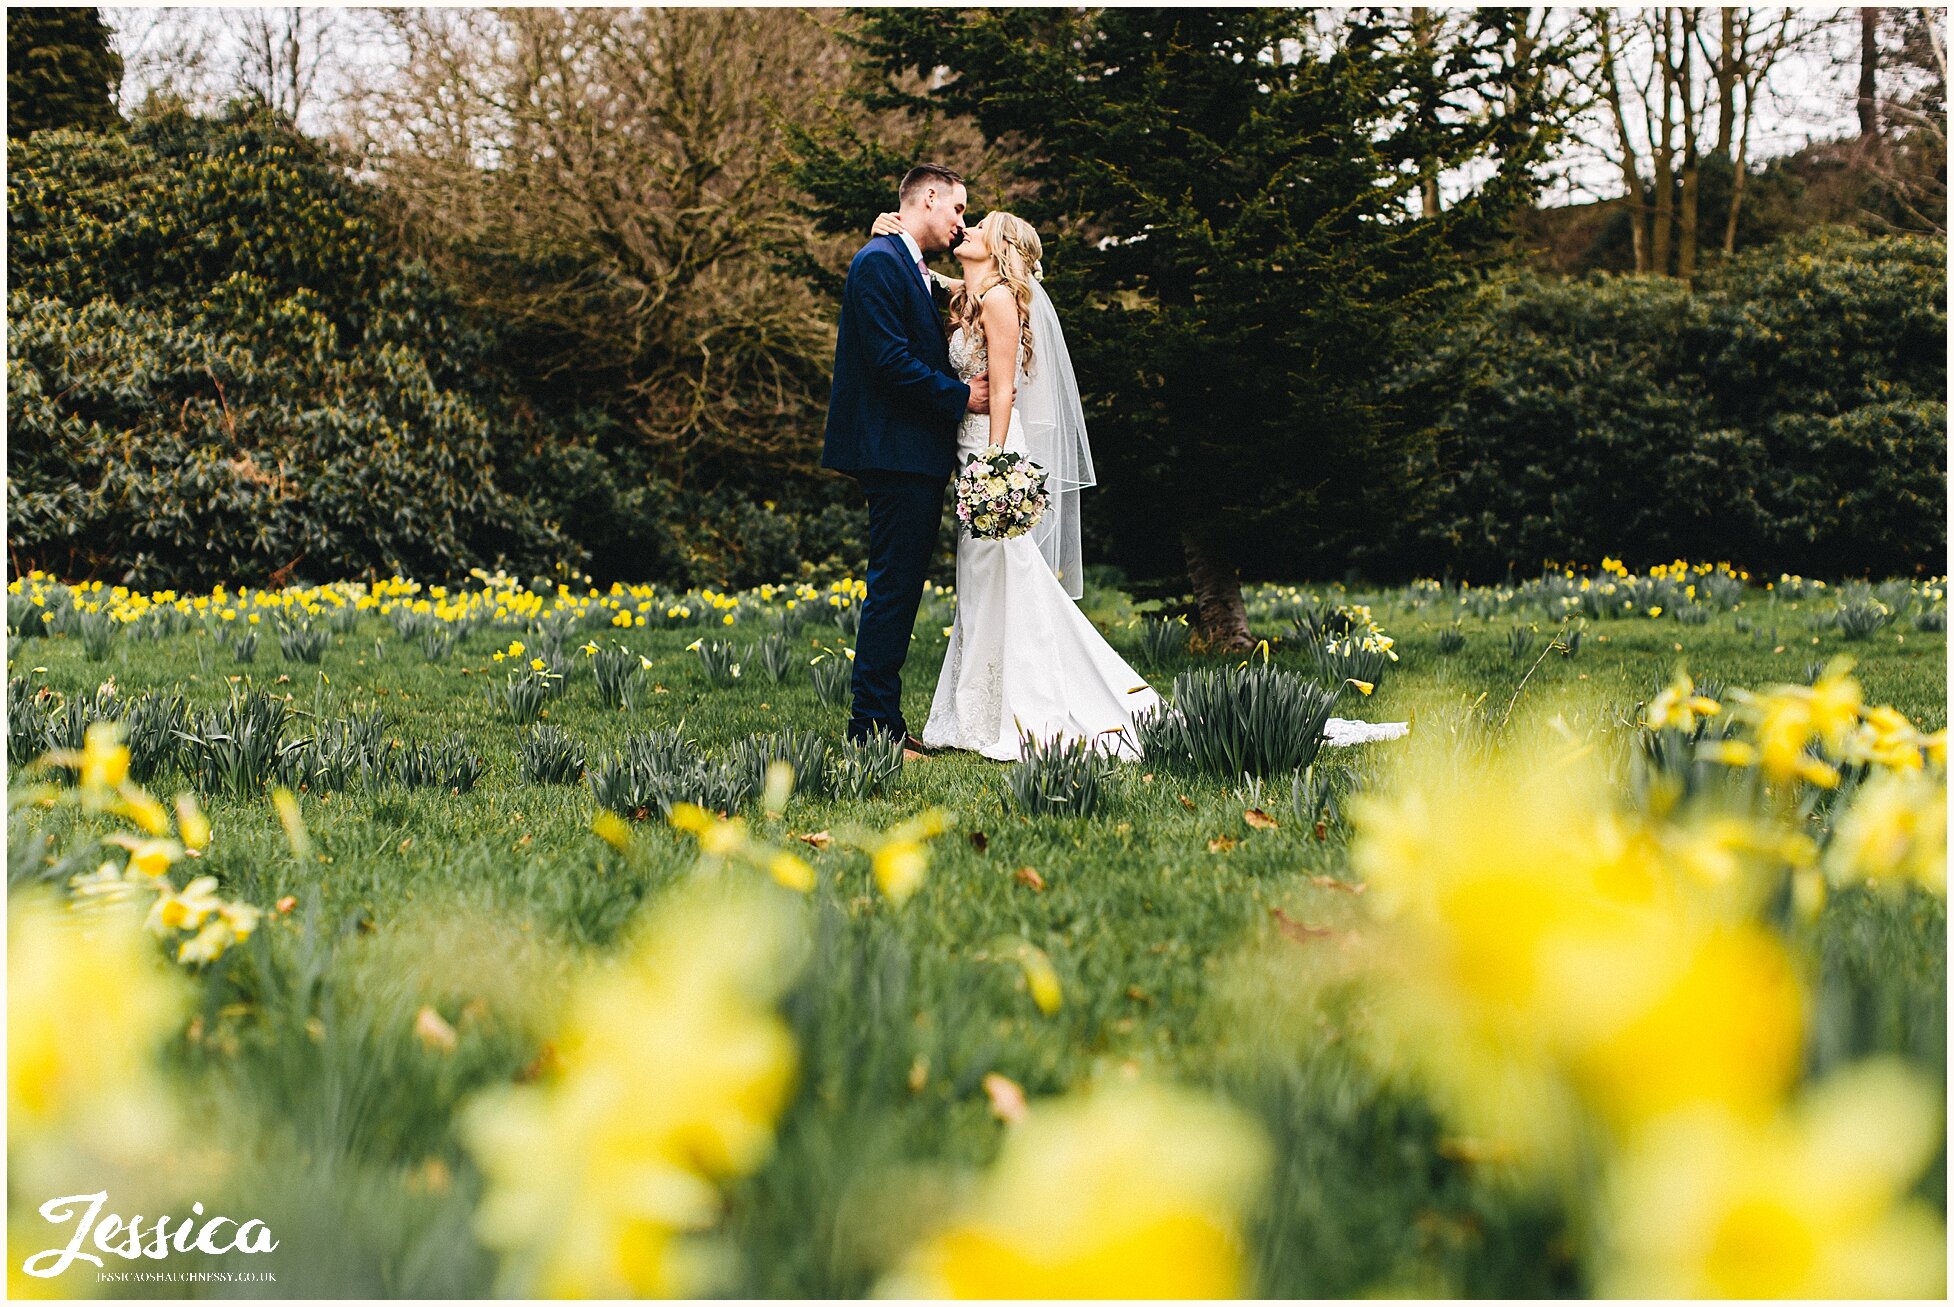 daffodils grow at Willington Hall for the spring wedding